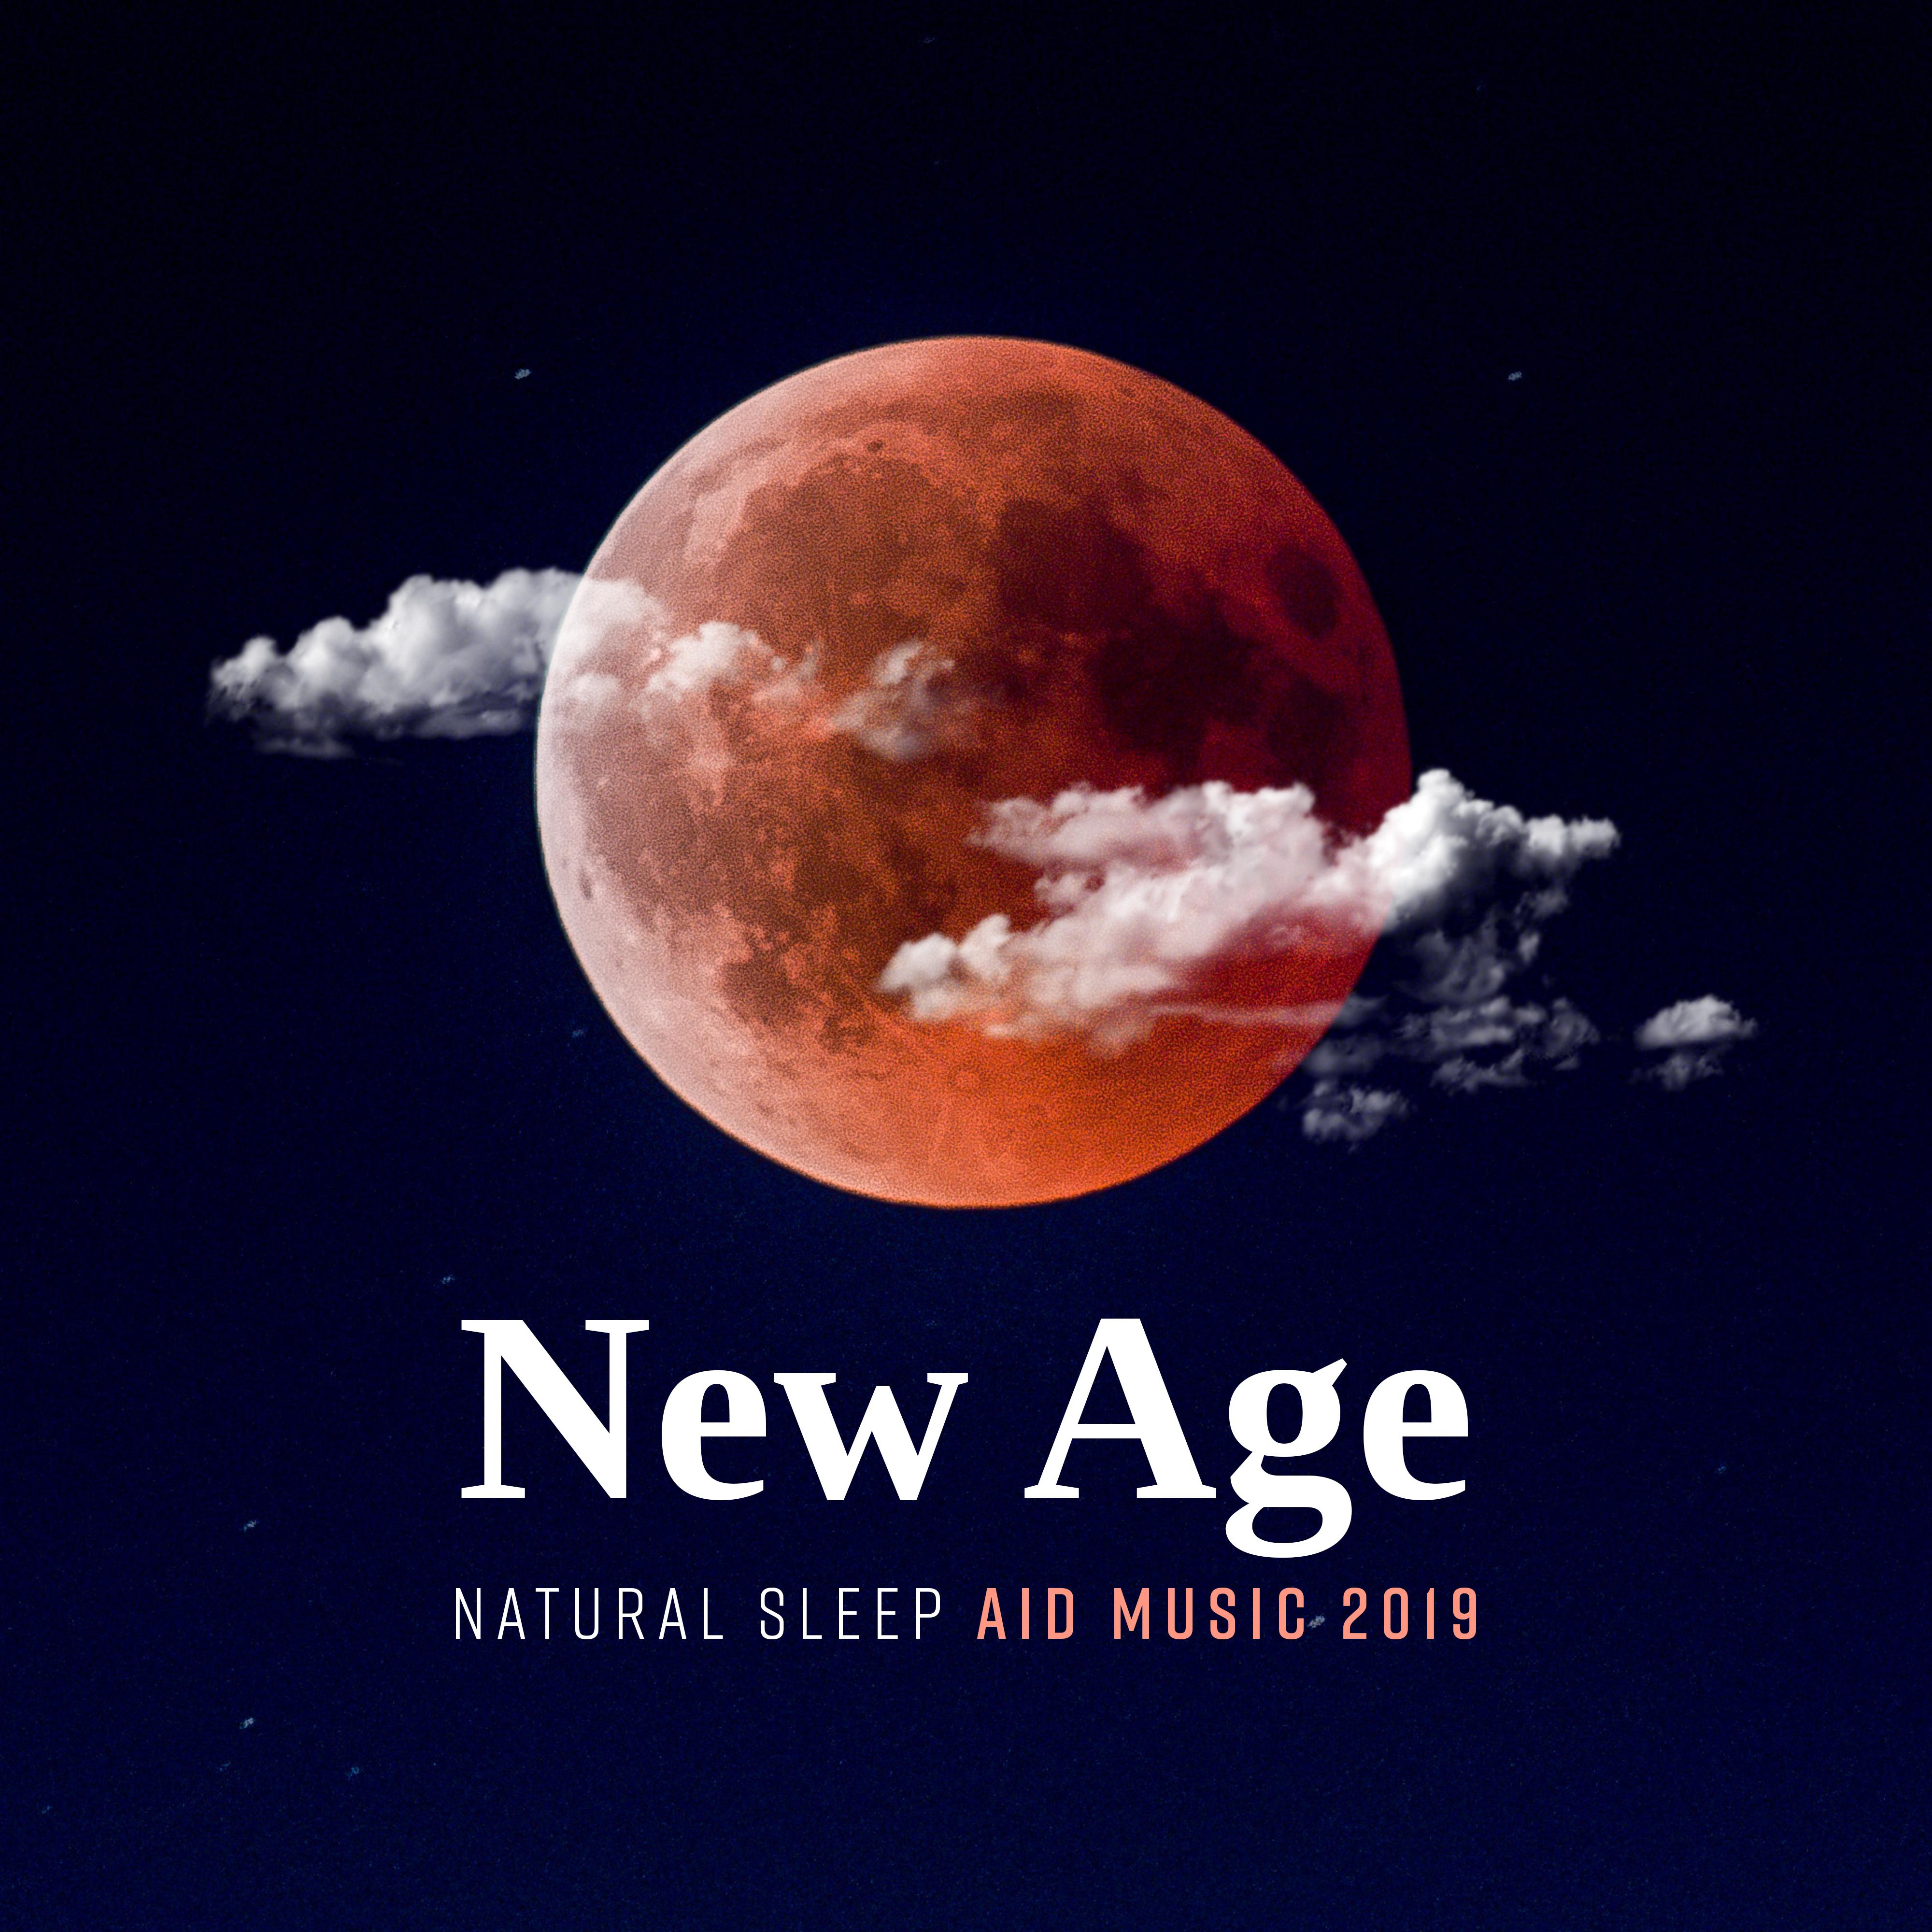 New Age Natural Sleep Aid Music 2019